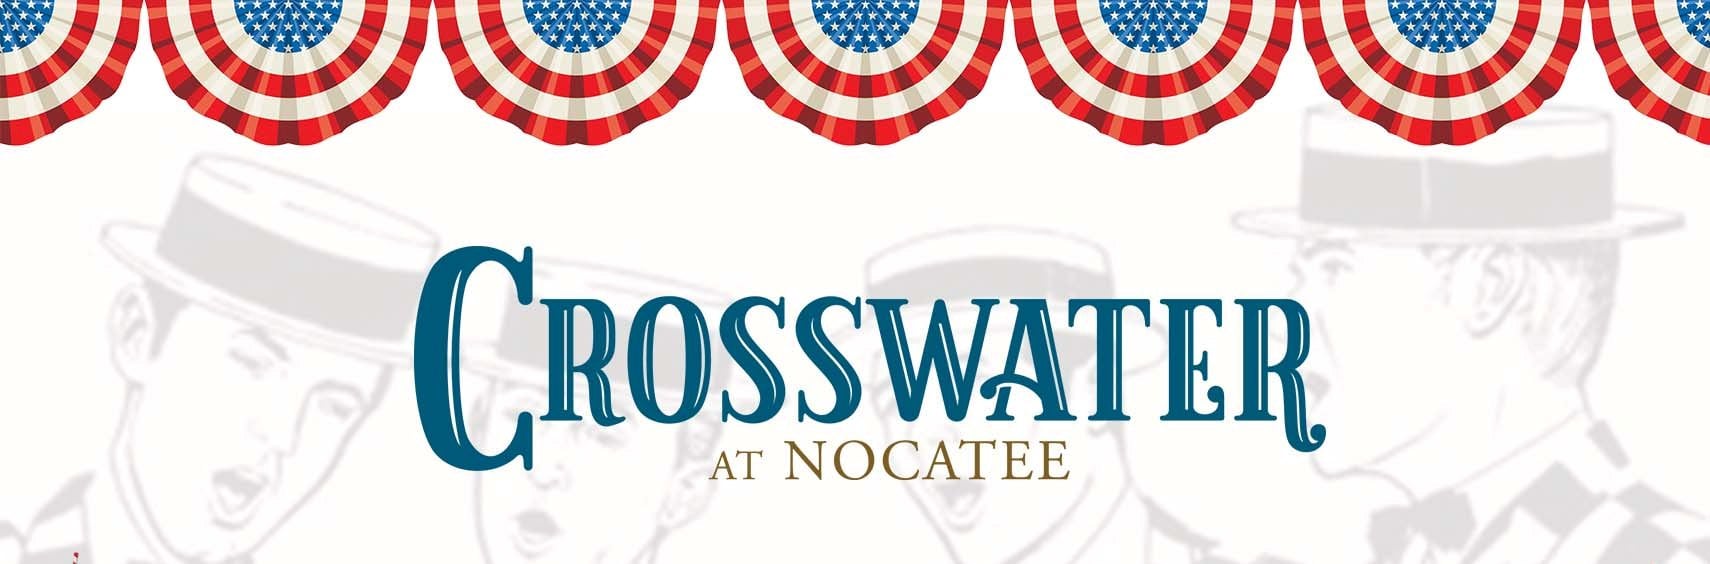 Crosswater at Nocatee Grand-Opening